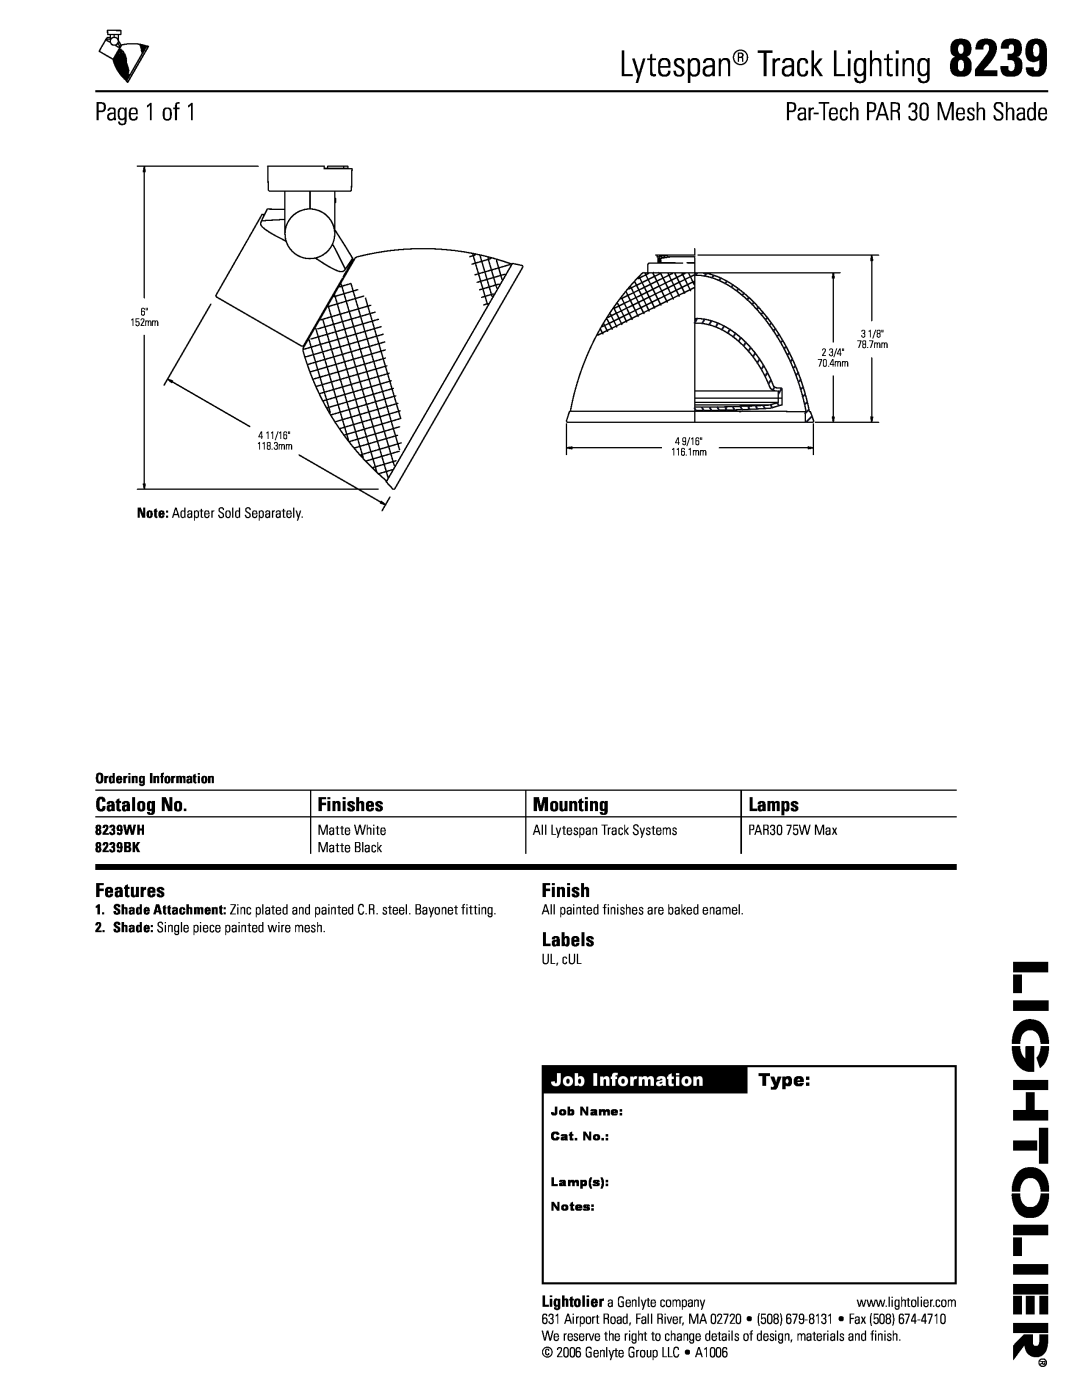 Lightolier 8239 manual Lytespan Track Lighting, Page of, Par-TechPAR 30 Mesh Shade, Catalog No, Finishes, Mounting, Lamps 